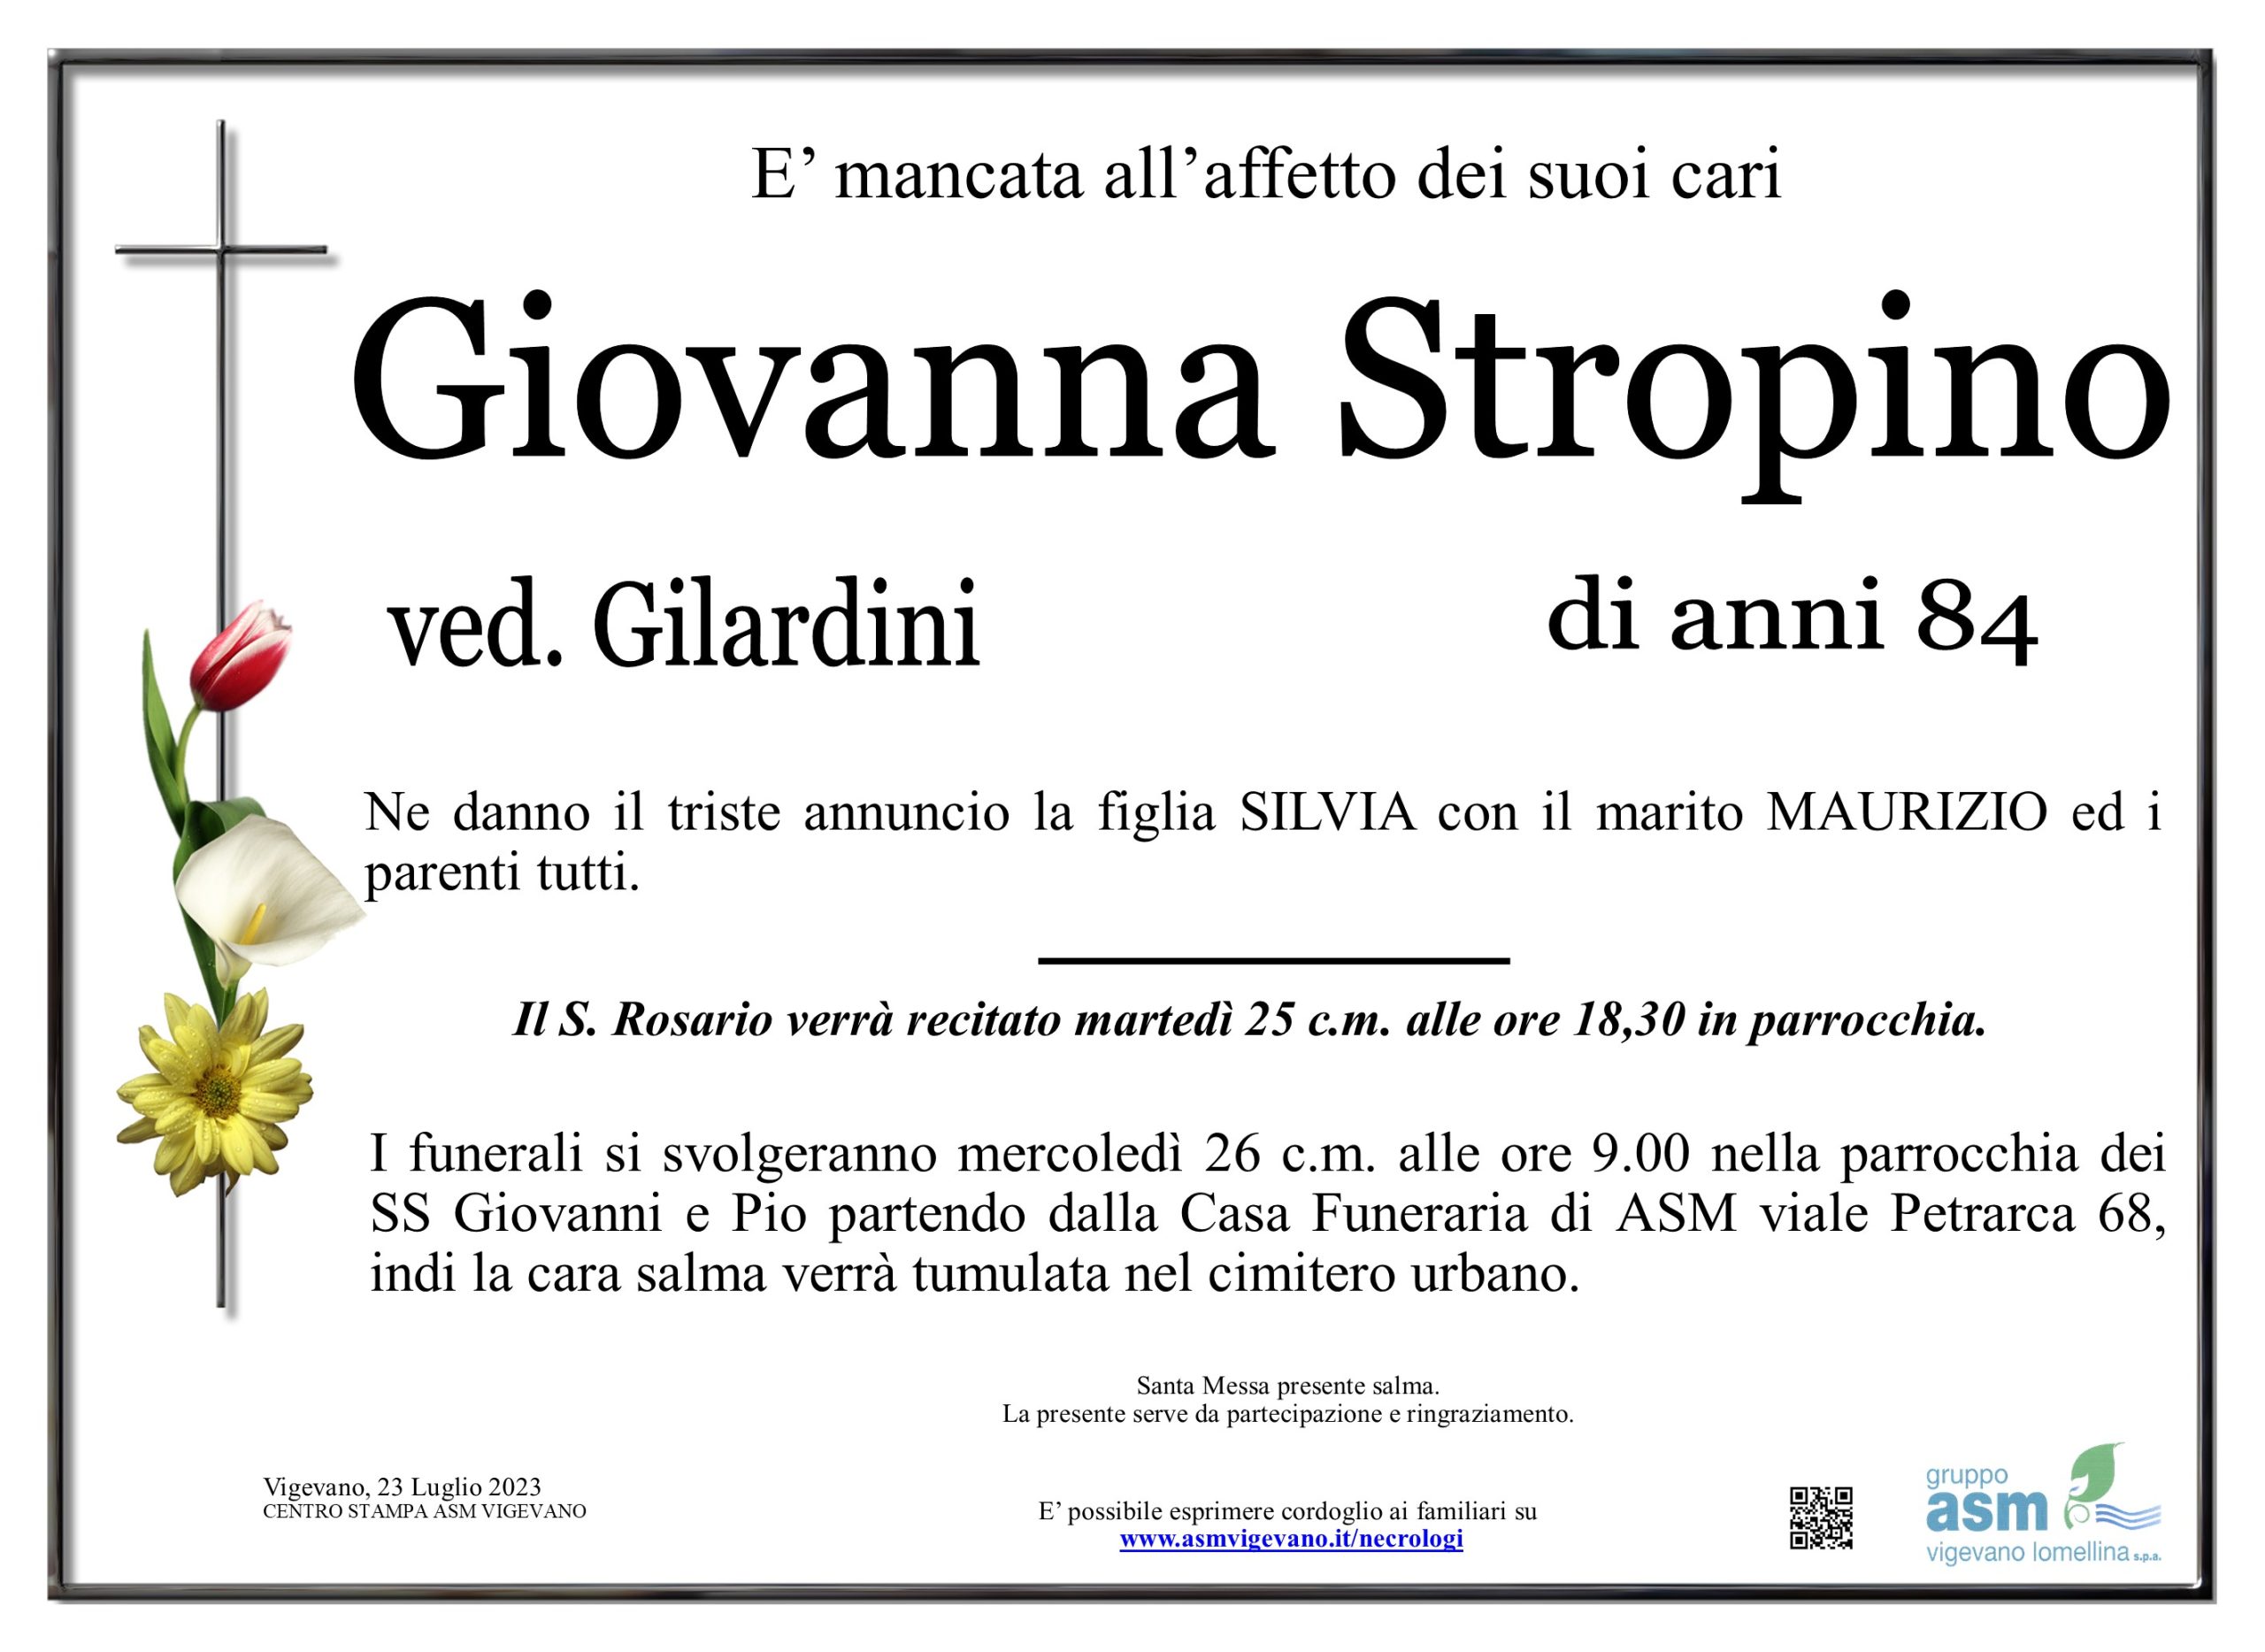 Giovanna Stropino